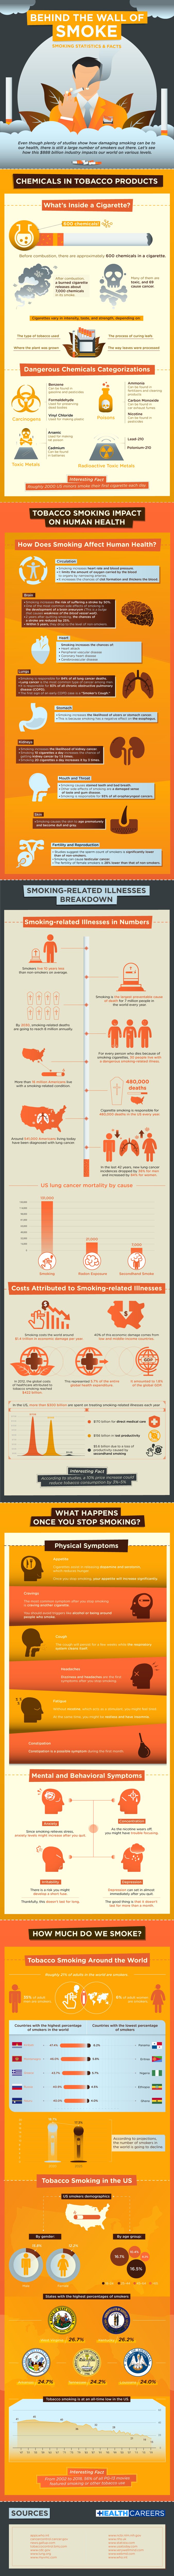 Behind the Wall of Smoke Smoking Statistics Infographic - smoking statistics